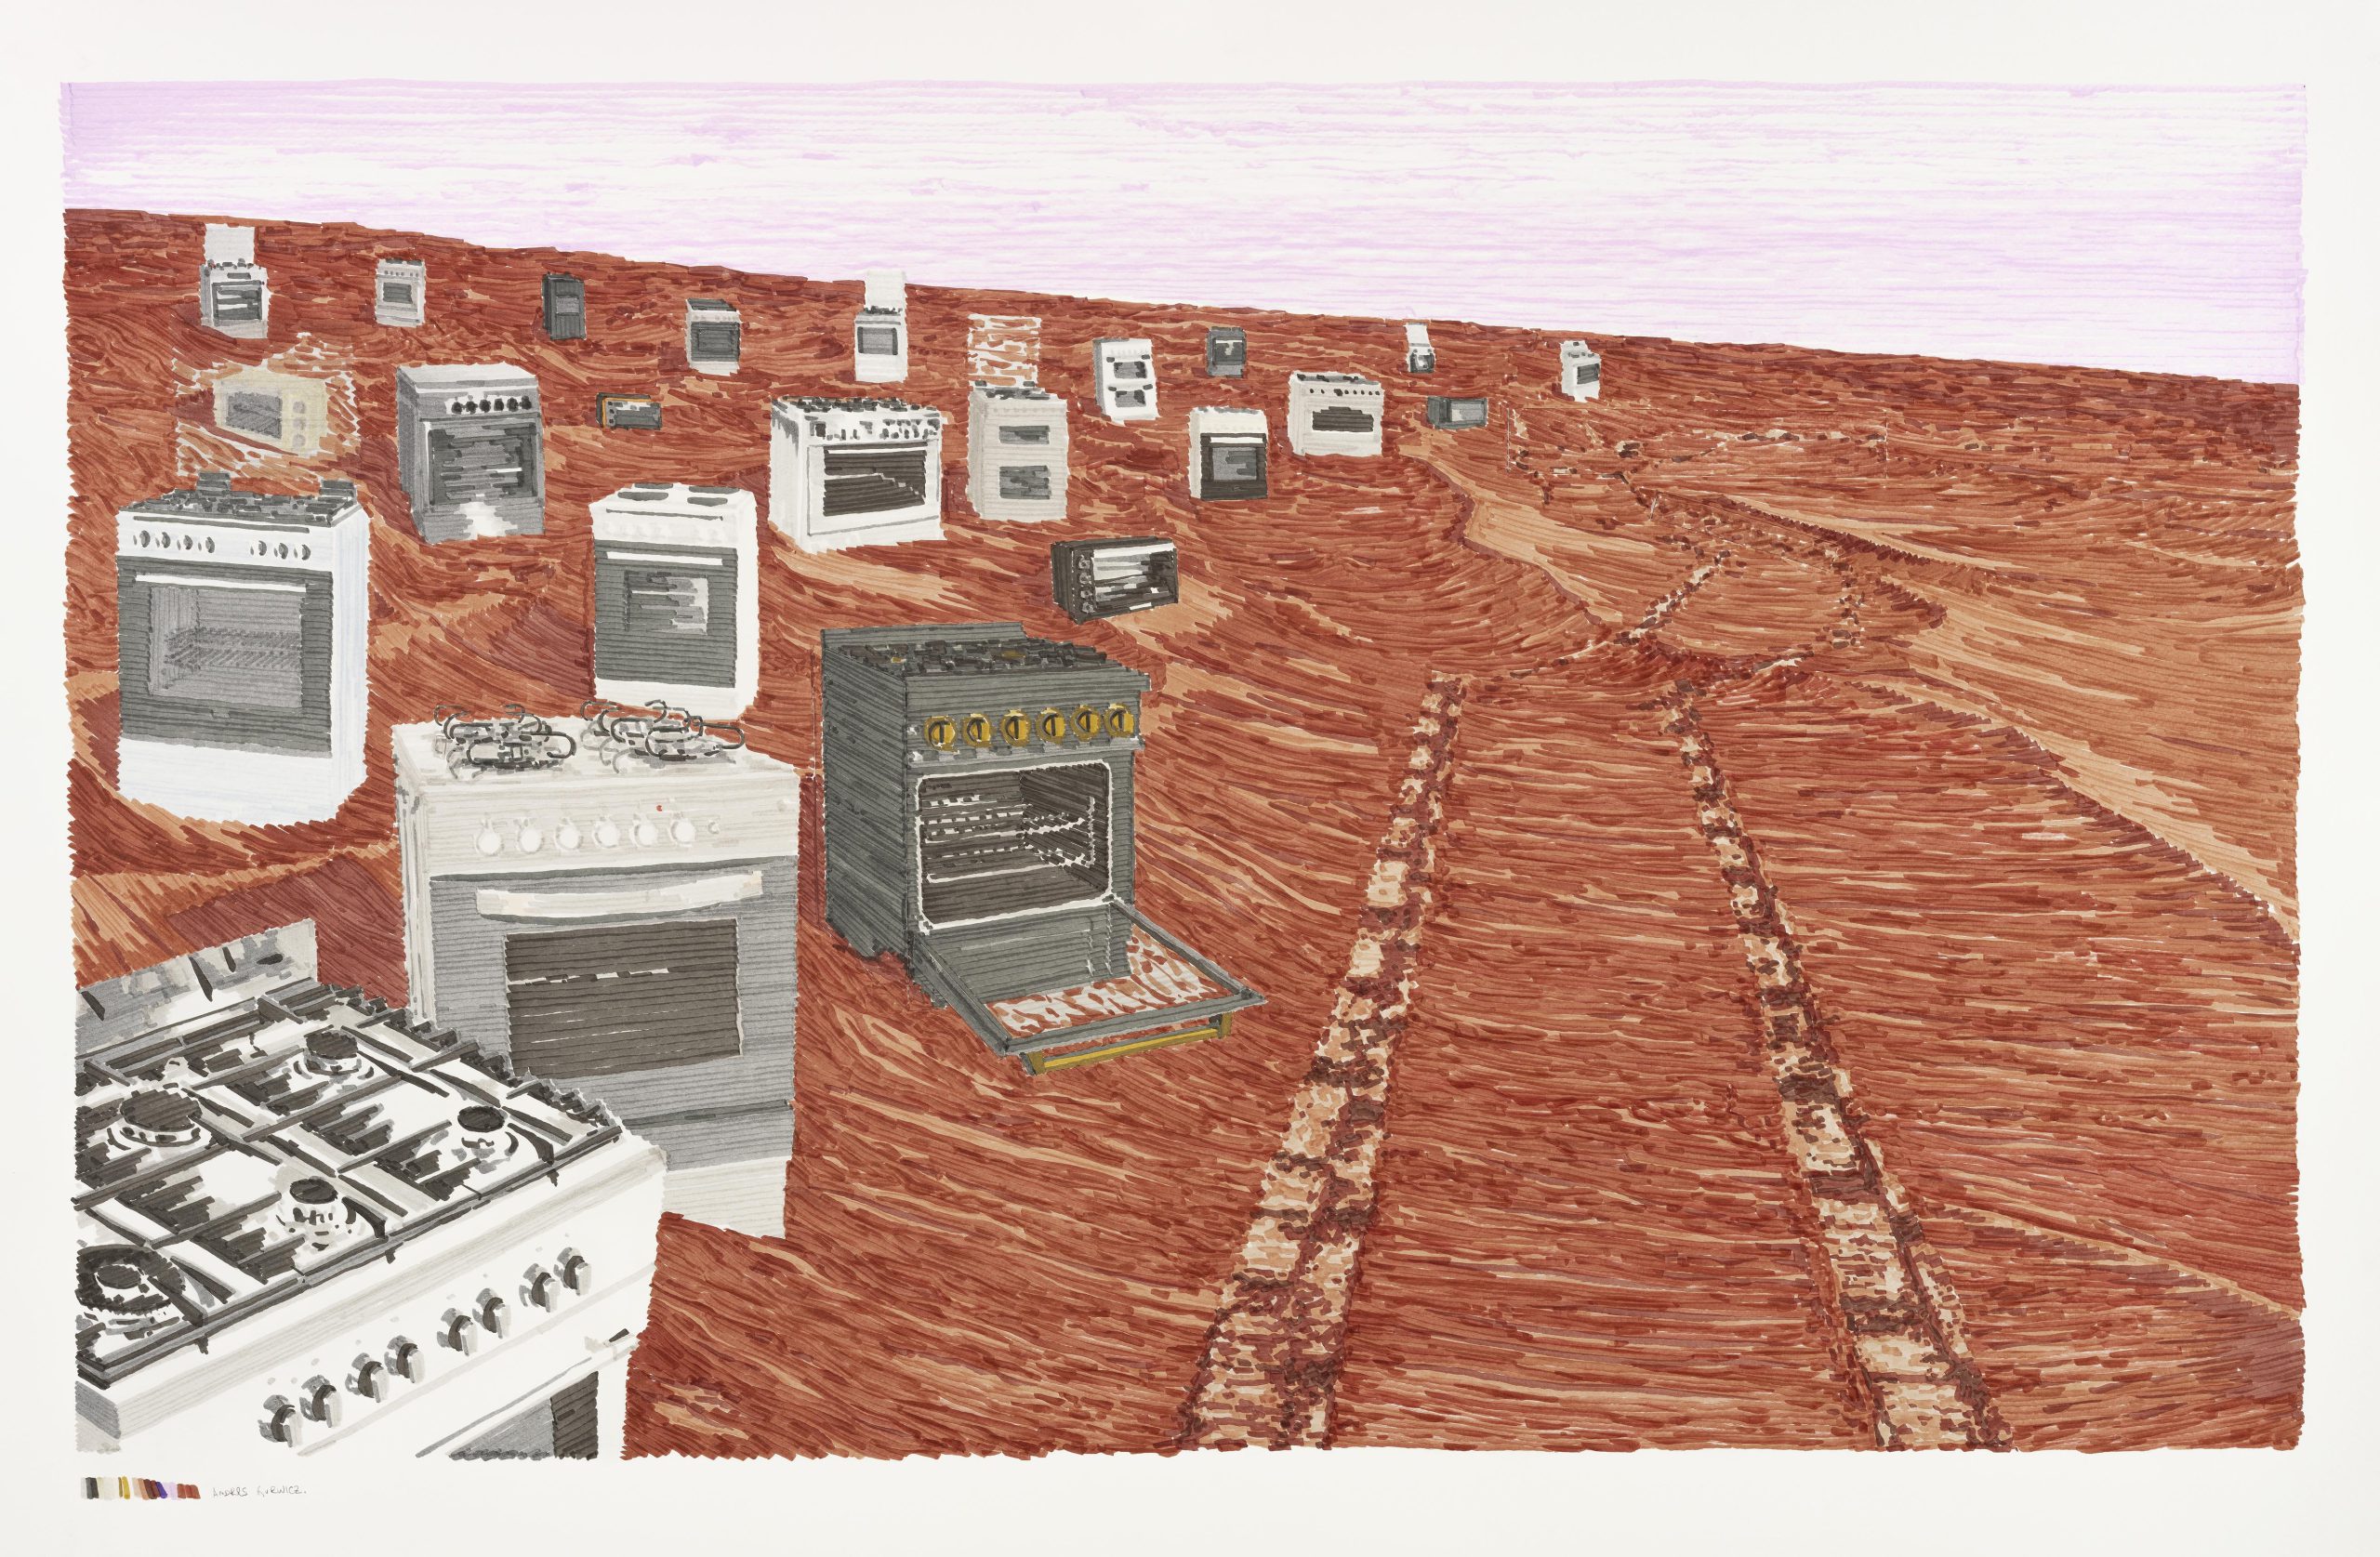 Residence on Mars (Ovens Installation 2)